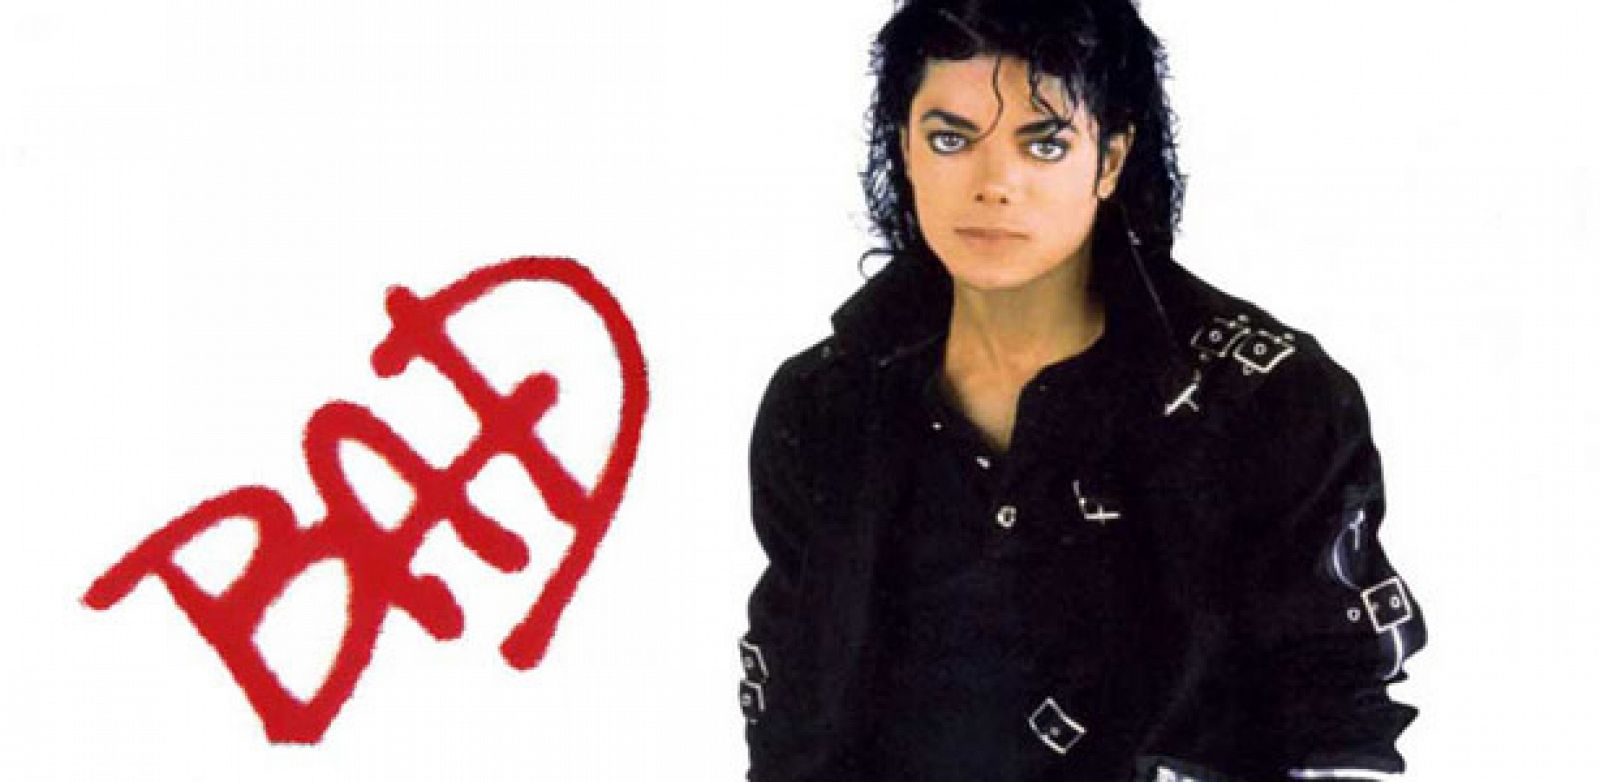 Fragmento de la portada de 'Bad', de Michael Jackson